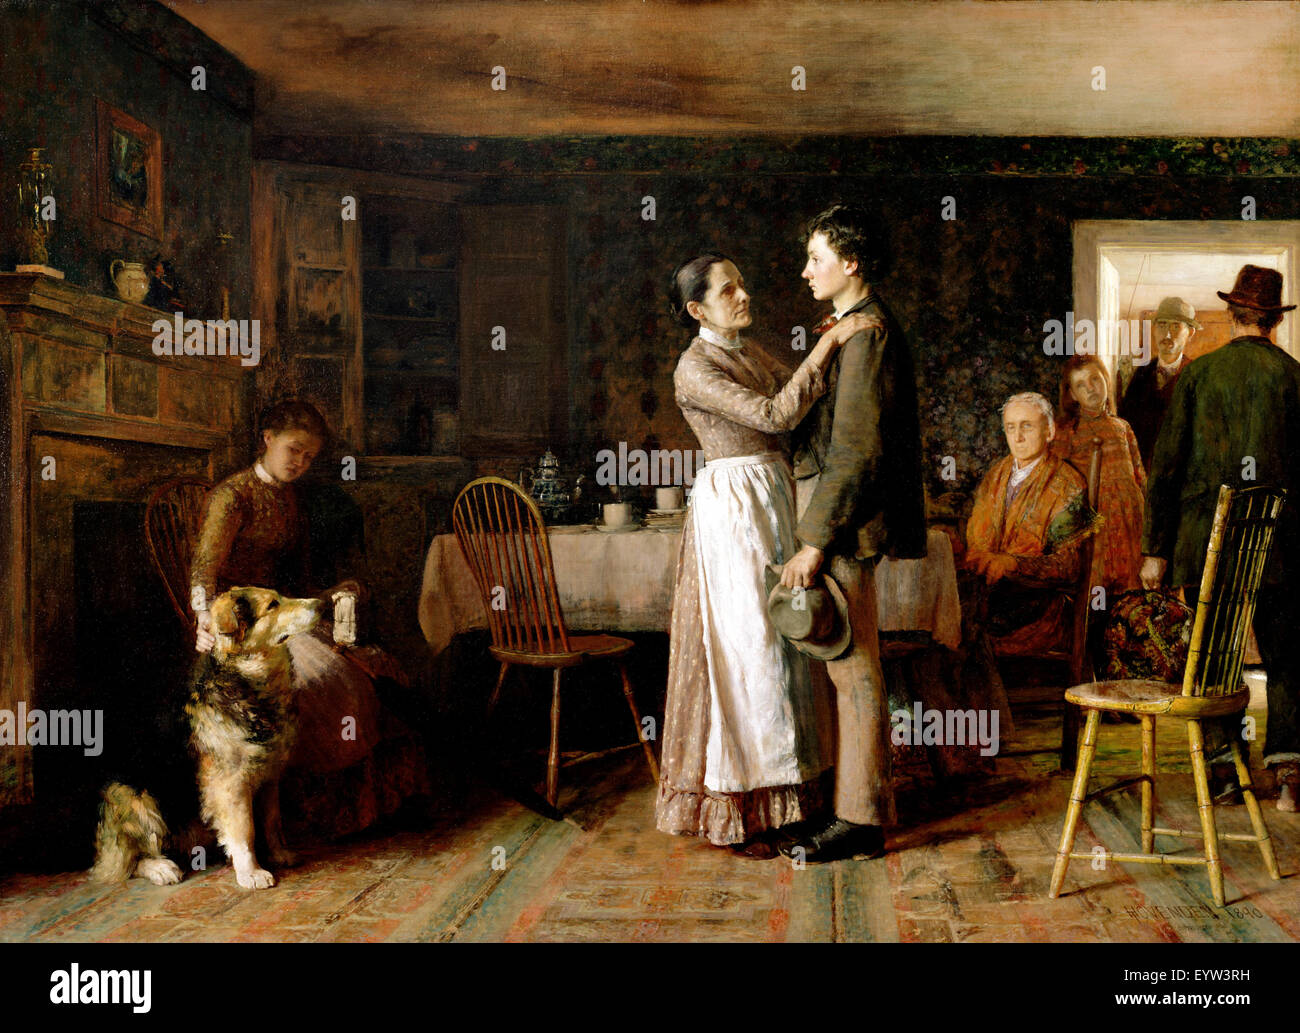 Thomas Hovenden, Breaking Home Ties 1890 Oil on canvas. Philadelphia Museum of Art, USA. Stock Photo